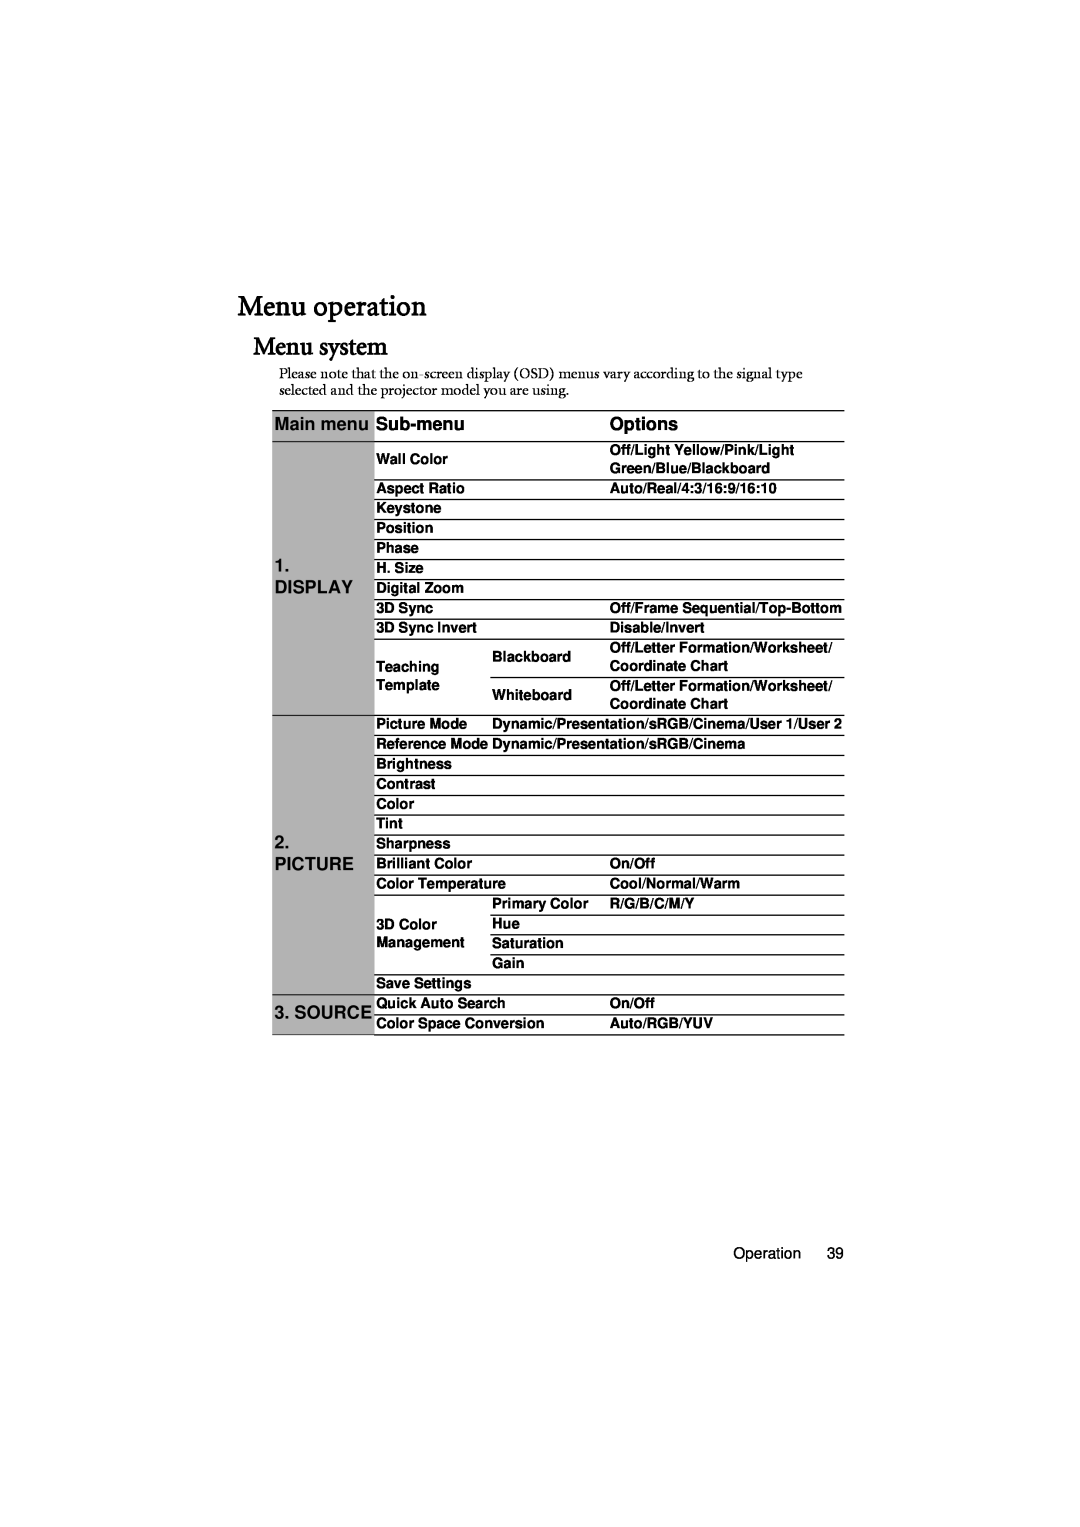 BenQ MX701 user manual Menu operation, Menu system 